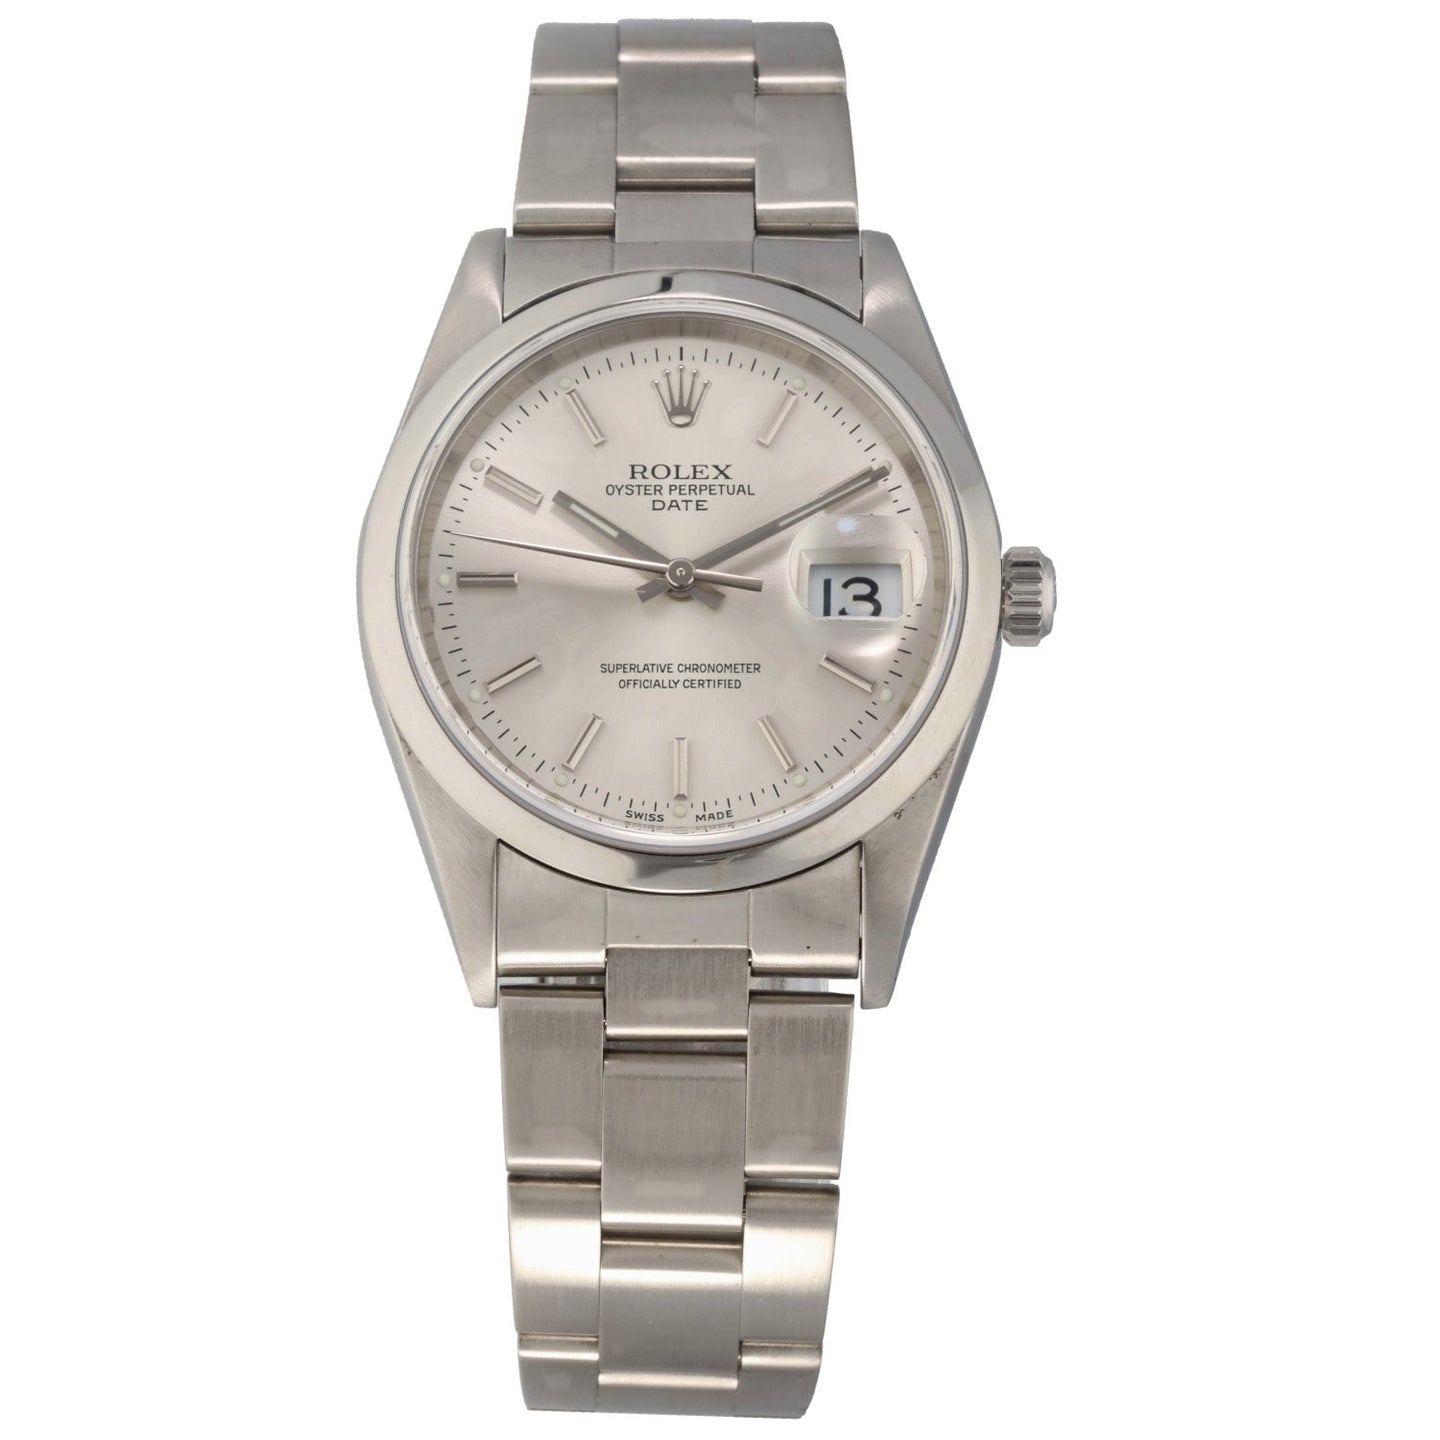 Rolex Date 15200 34mm Stainless Steel Watch